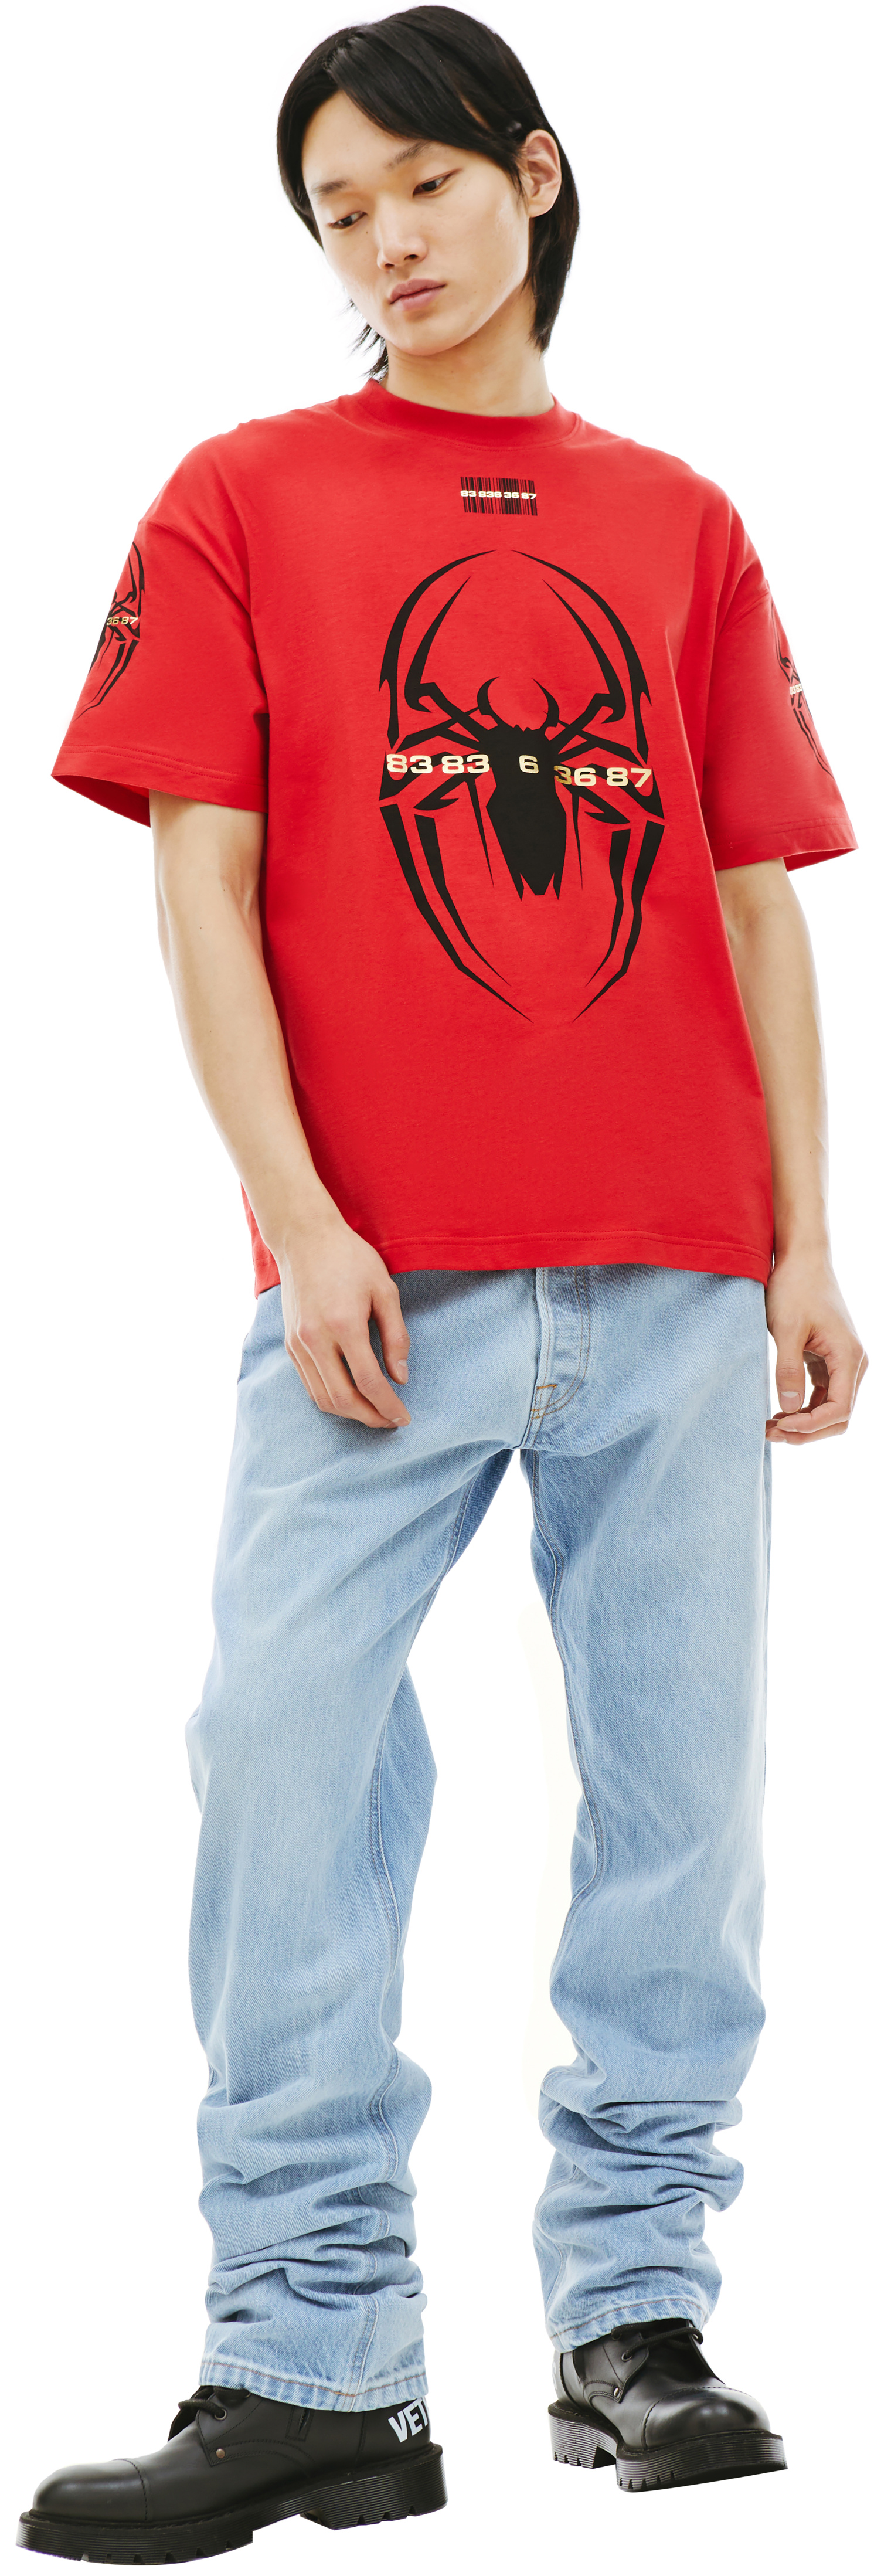 VTMNTS Spider Printed T-Shirt